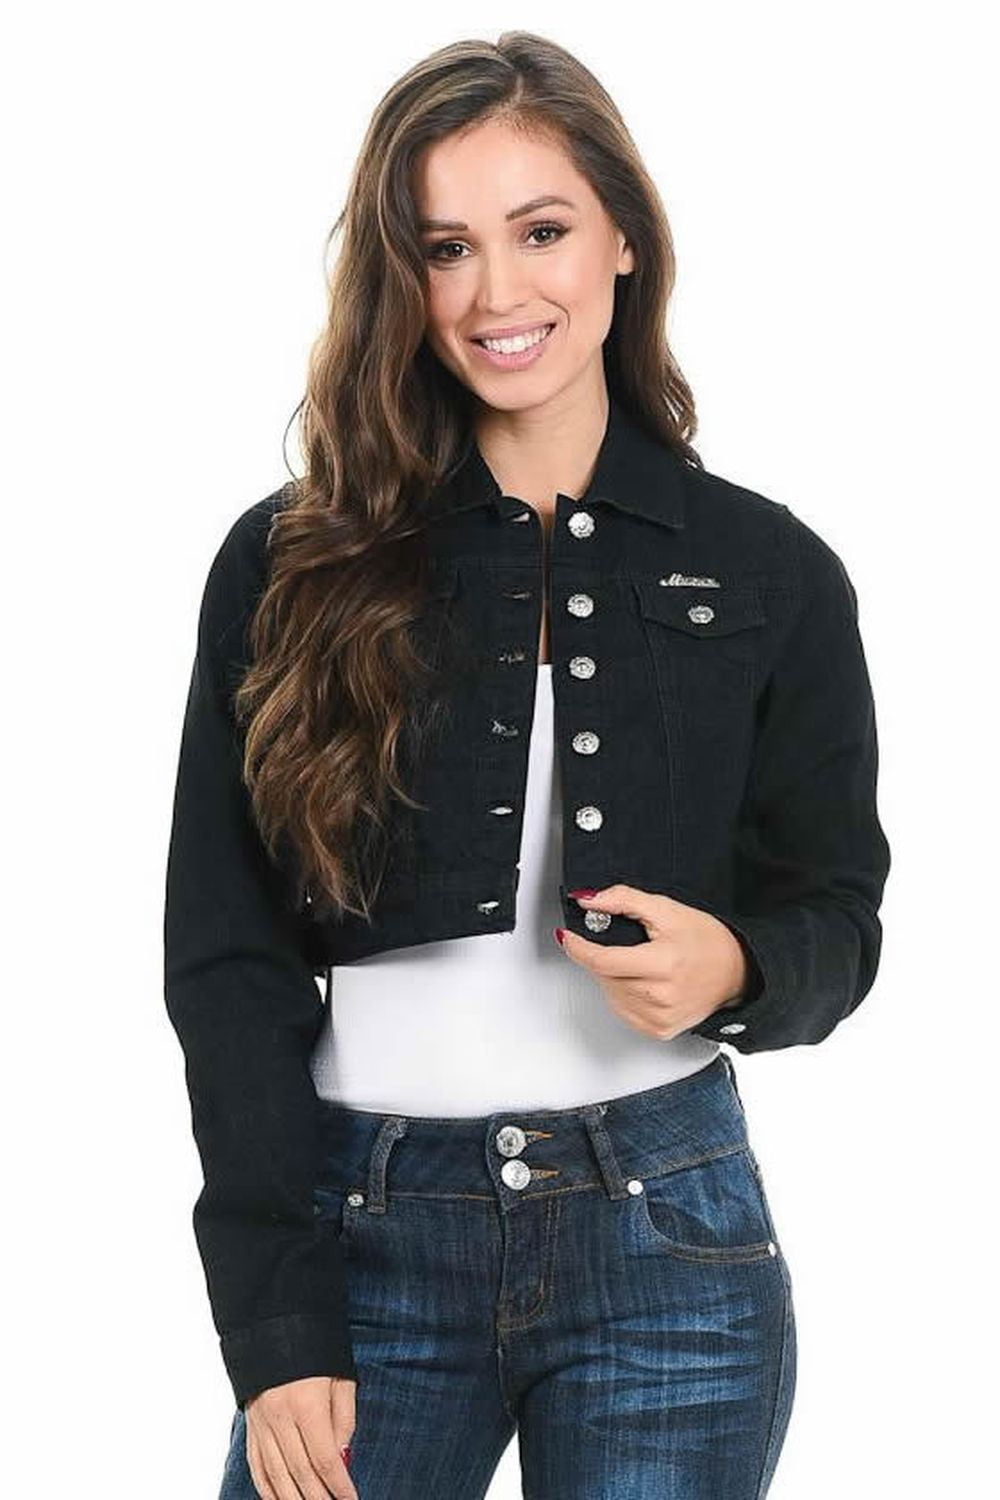 M.Michel - M.Michel Women's Denim Jacket · Style 292B - Walmart.com ...